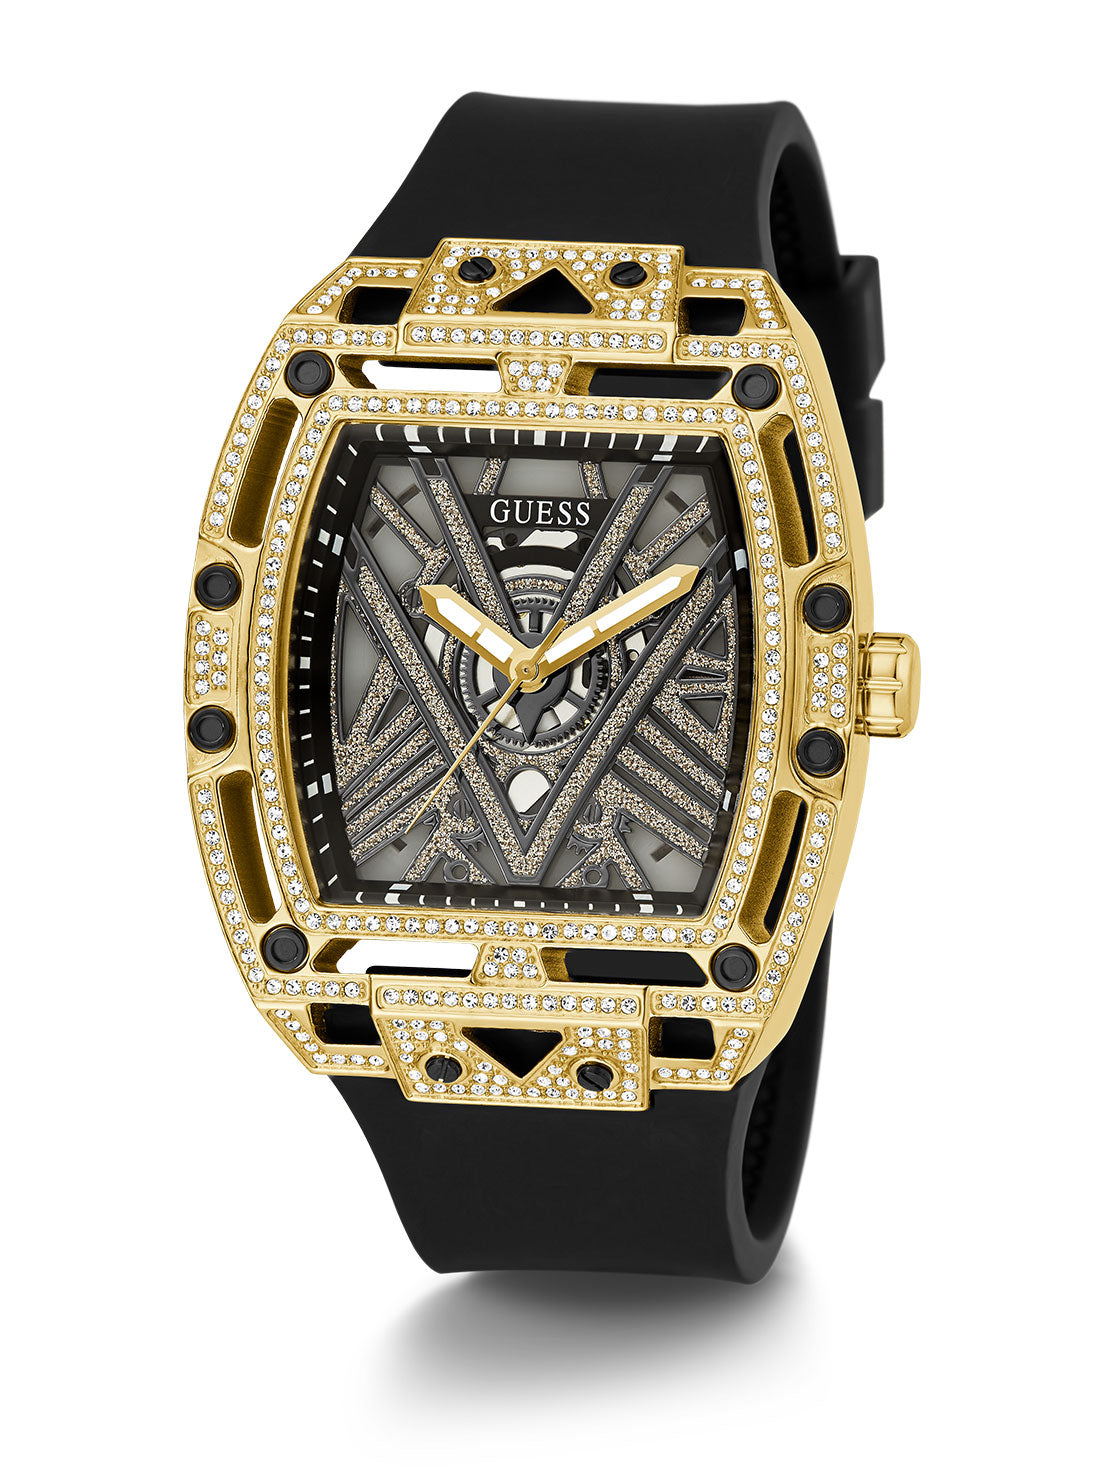 GUESS Men's Black Gold Legend Silicone Glitz Watch GW0564G1 Full View